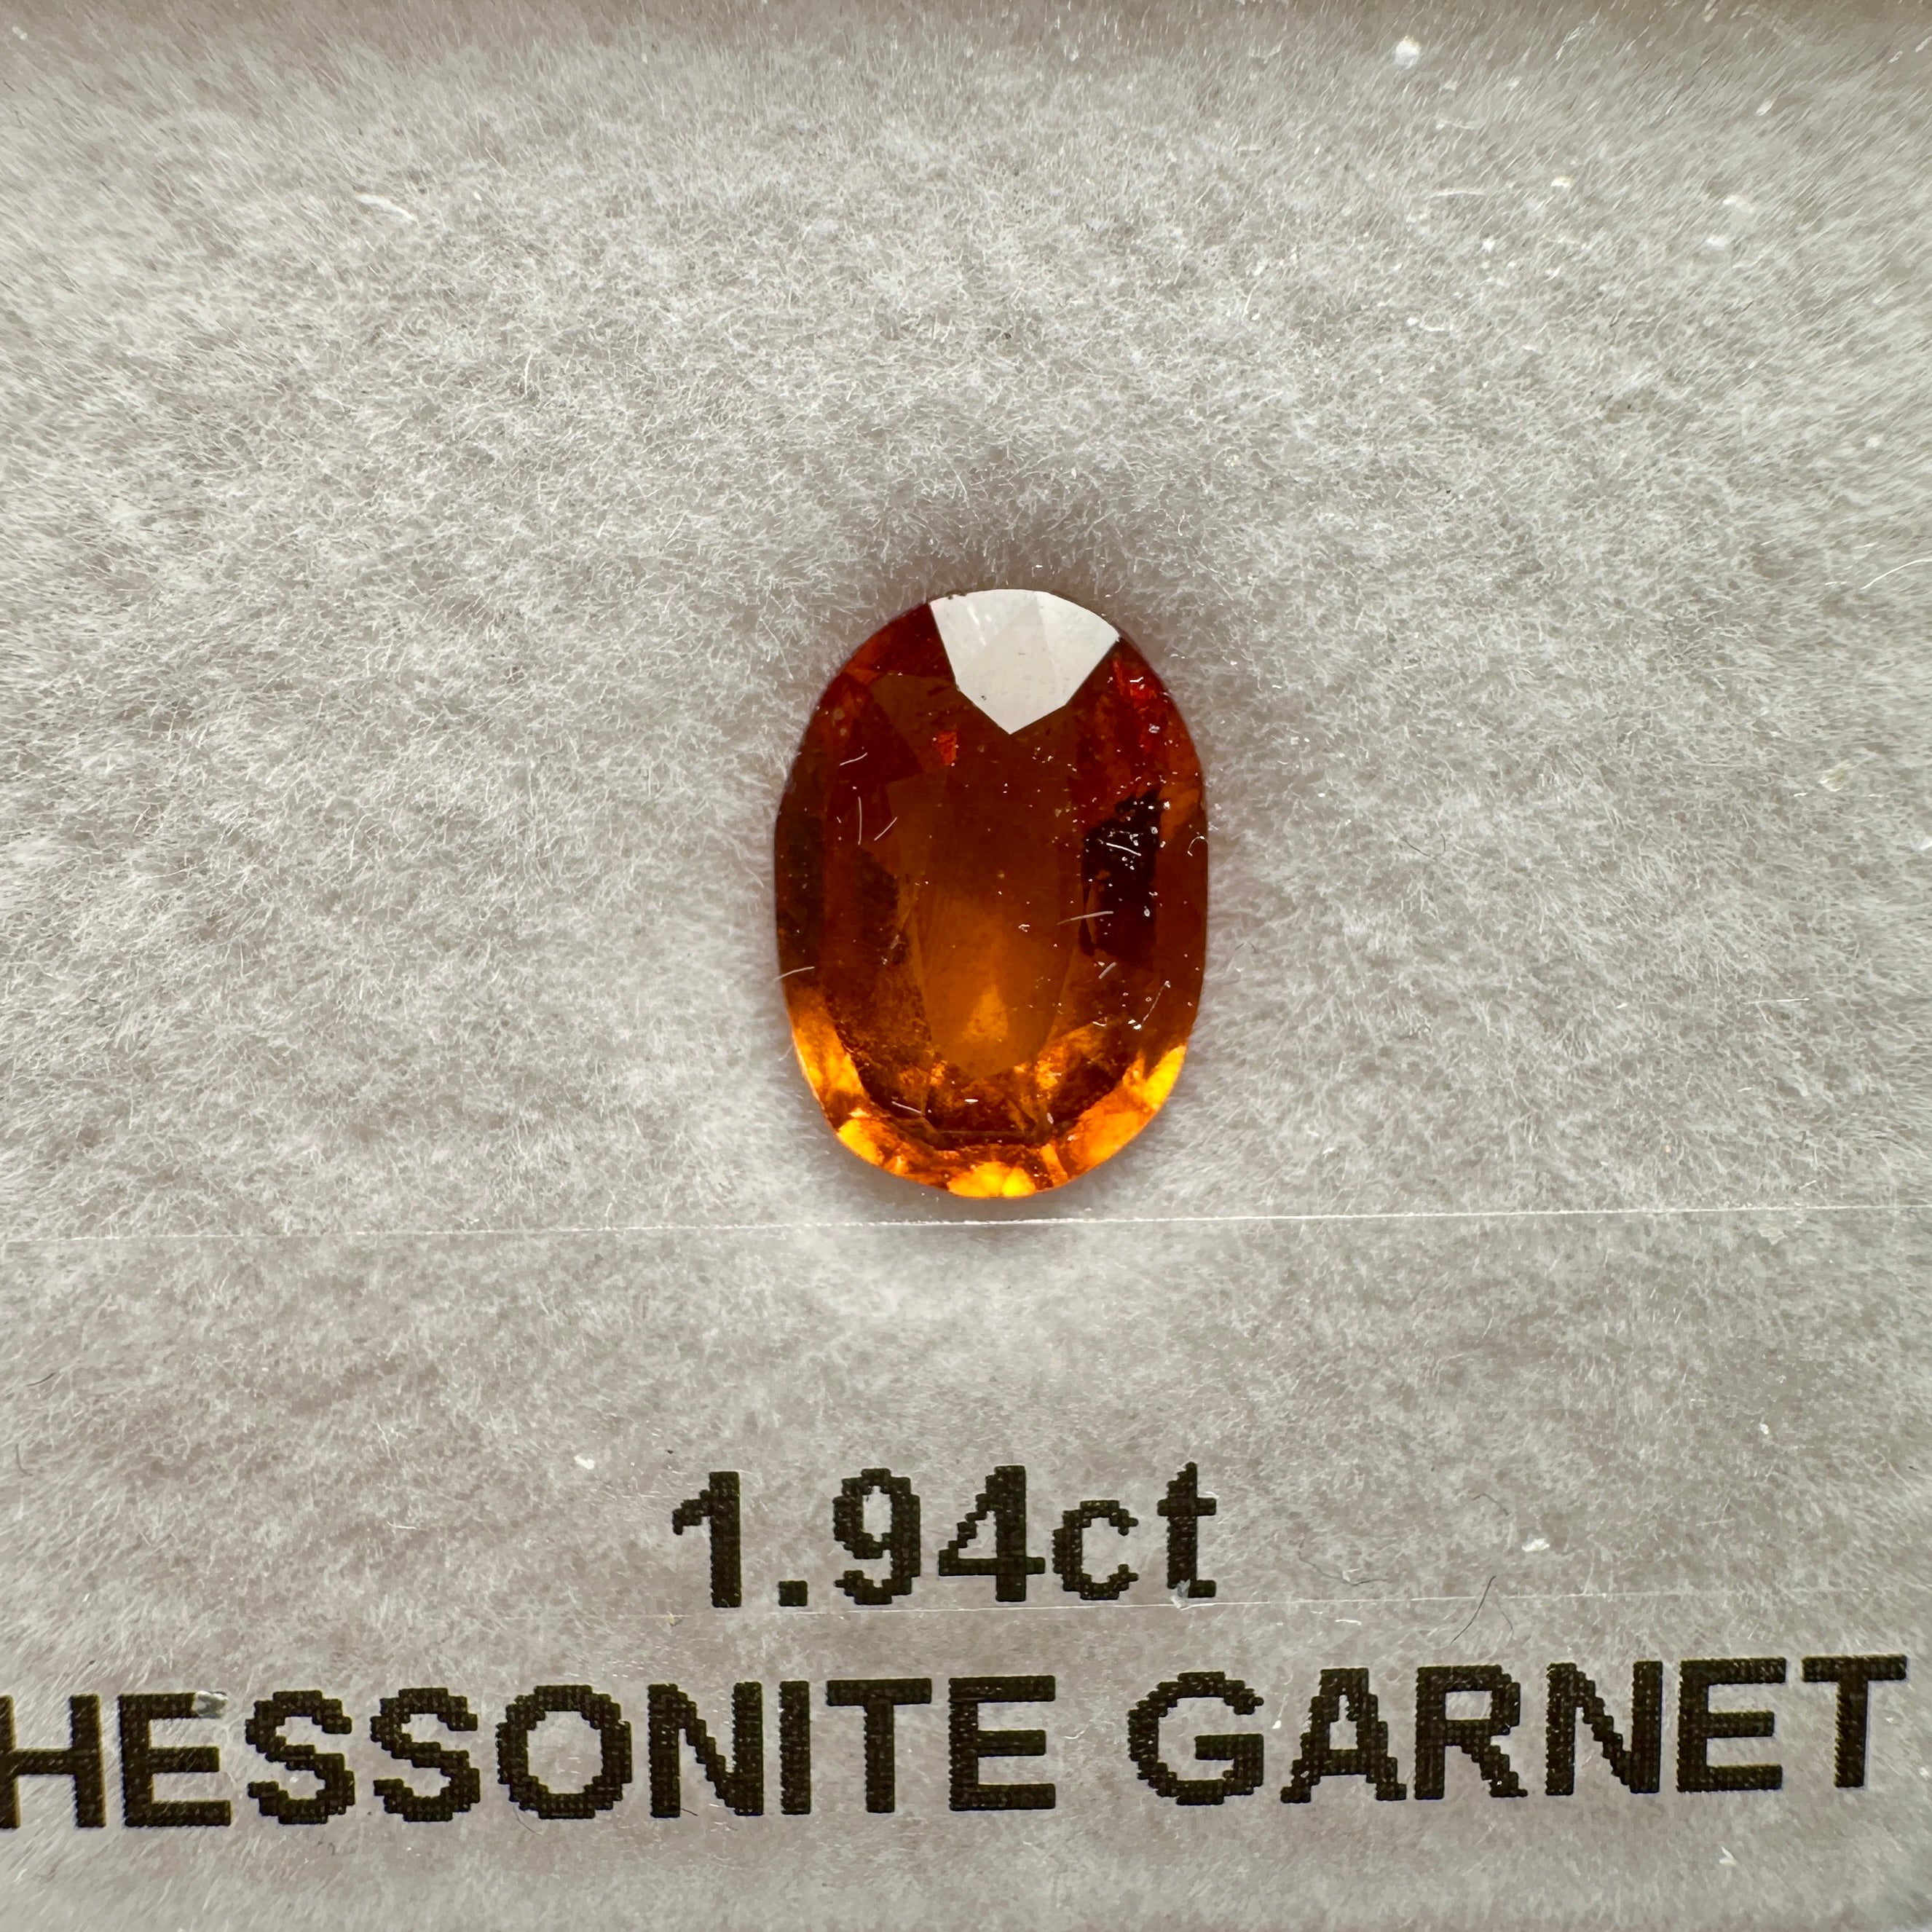 1.94ct Hessonite Garnet, Untreated Unheated, native cut